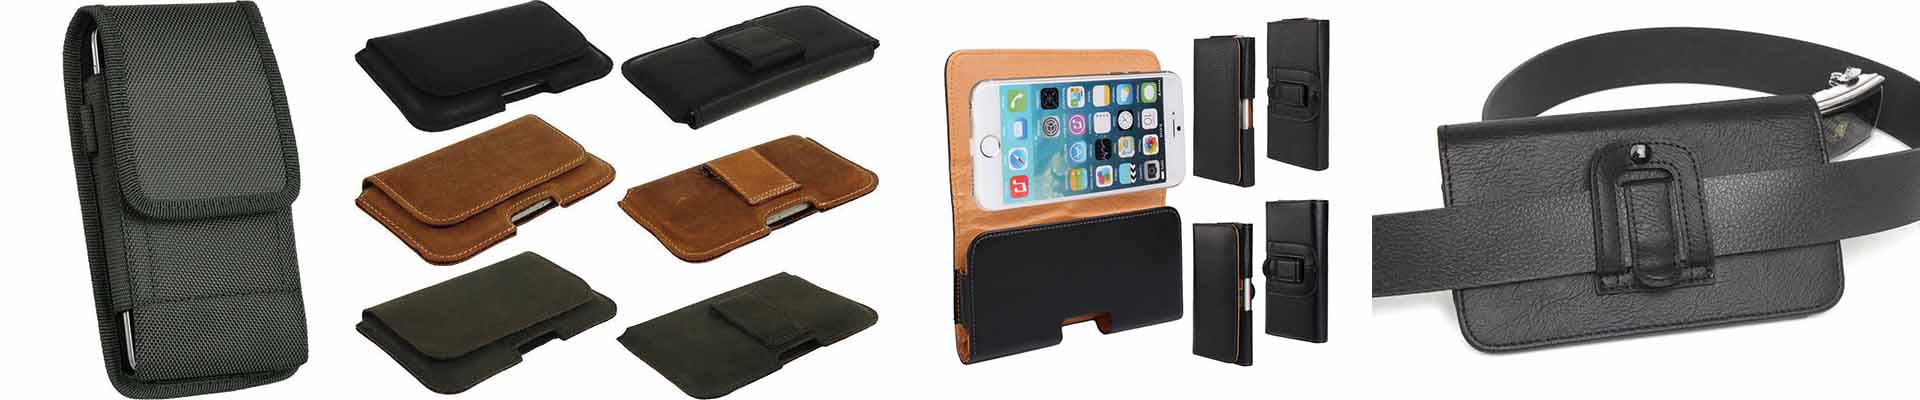 Gürtelholster-Taschen-handy-case-huelle-iPhone